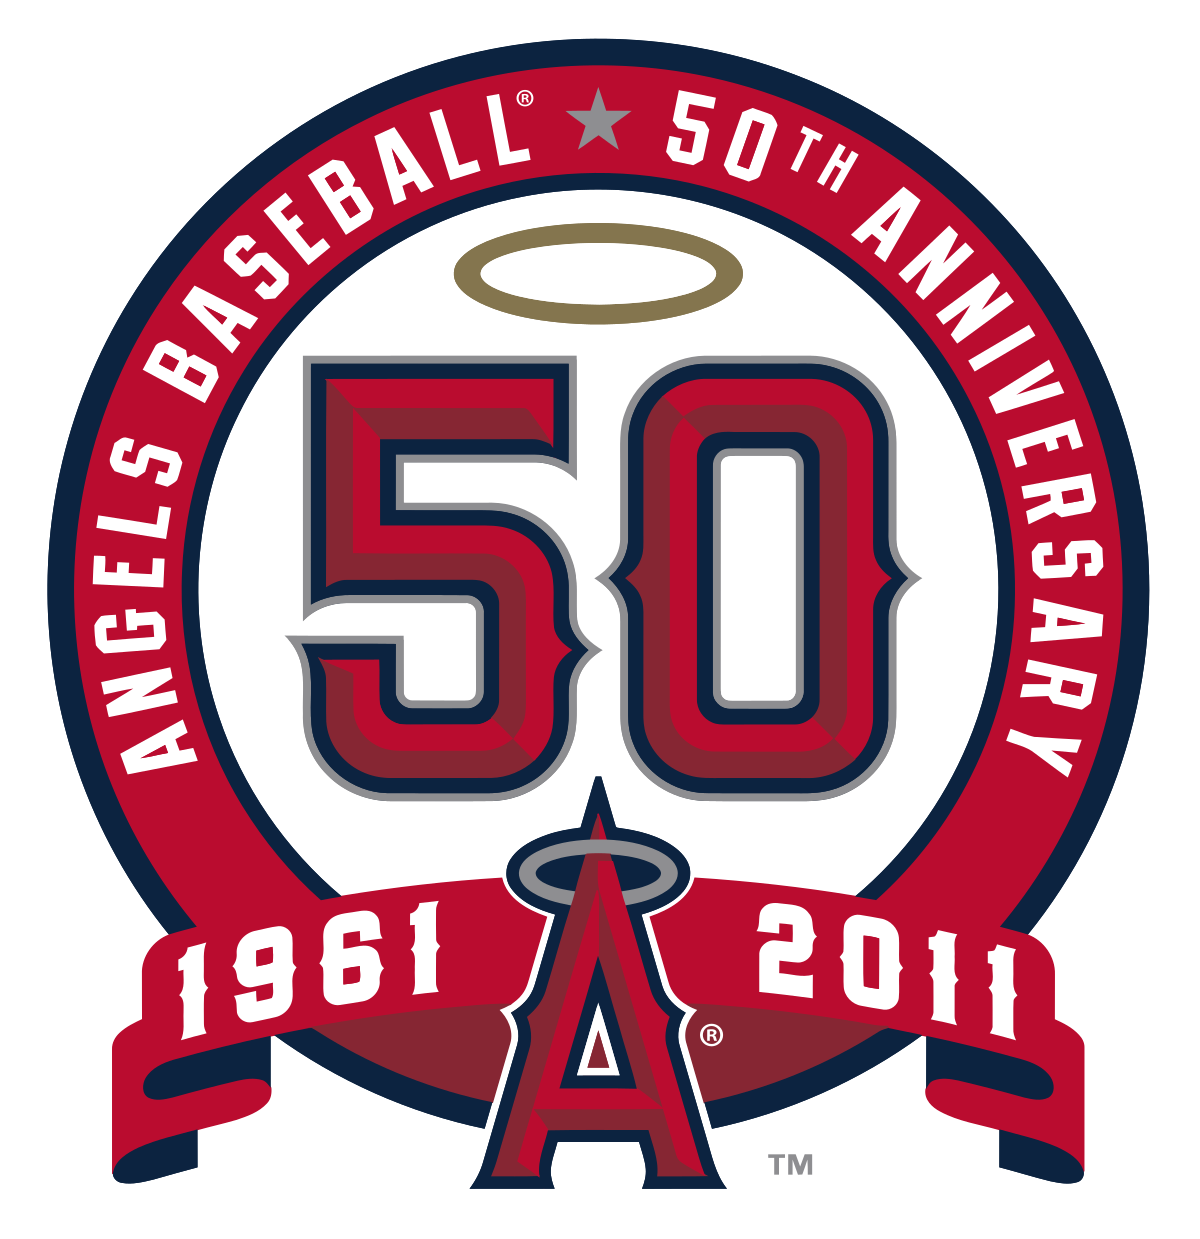 2002 Anaheim Angels season - Wikipedia